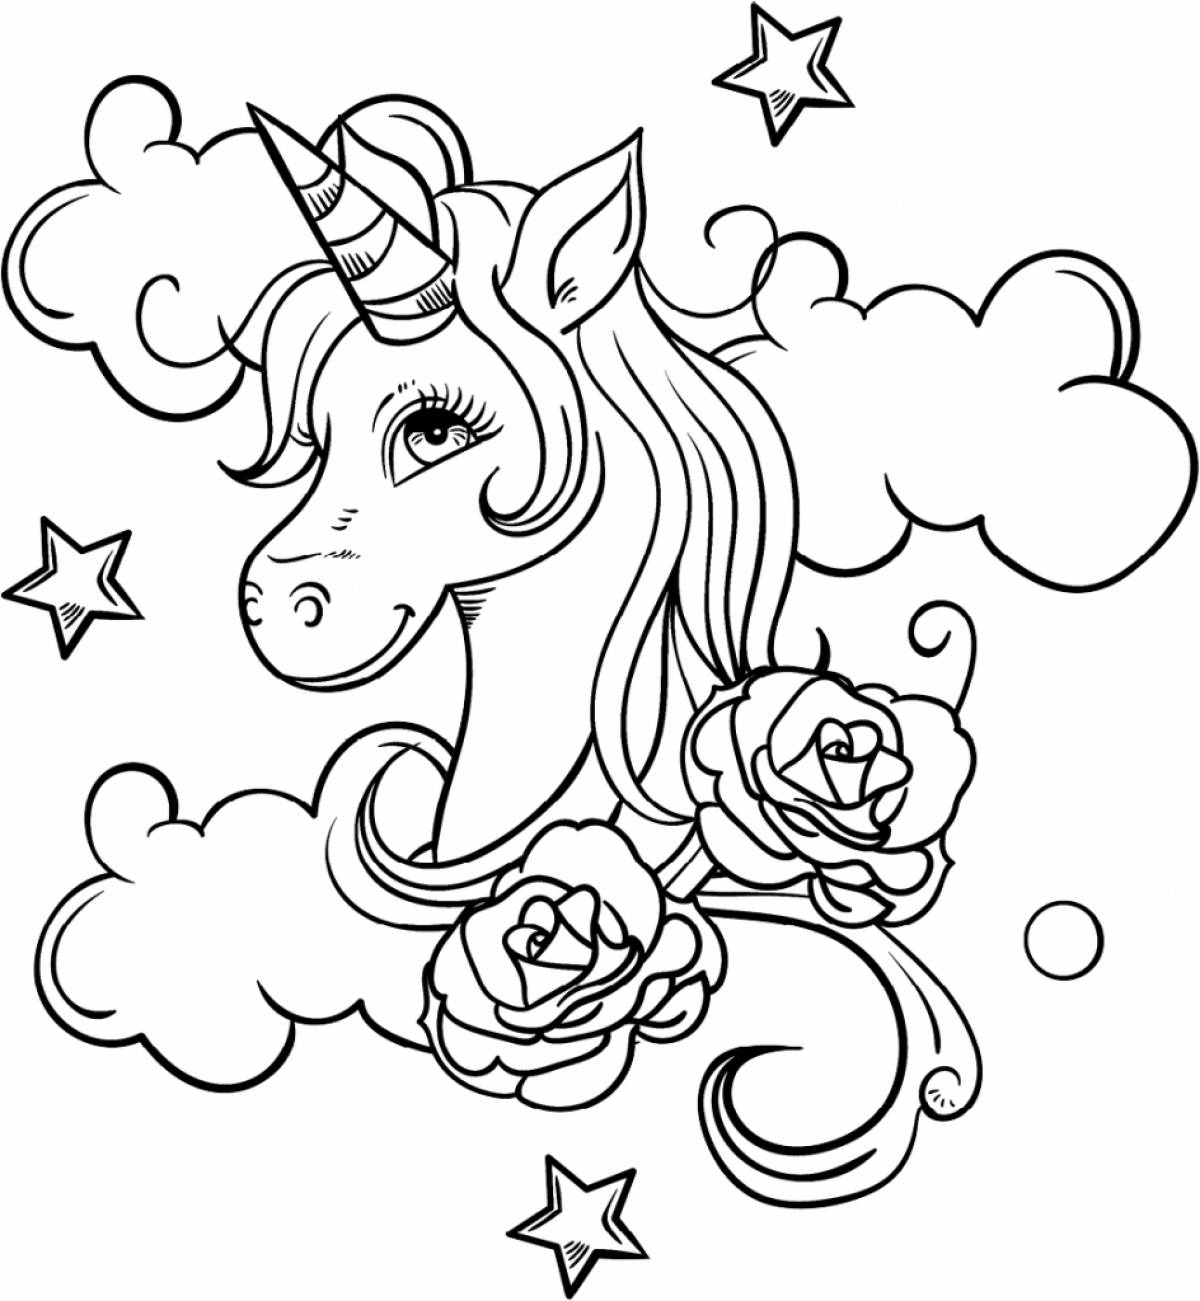 Fun coloring book with unicorns